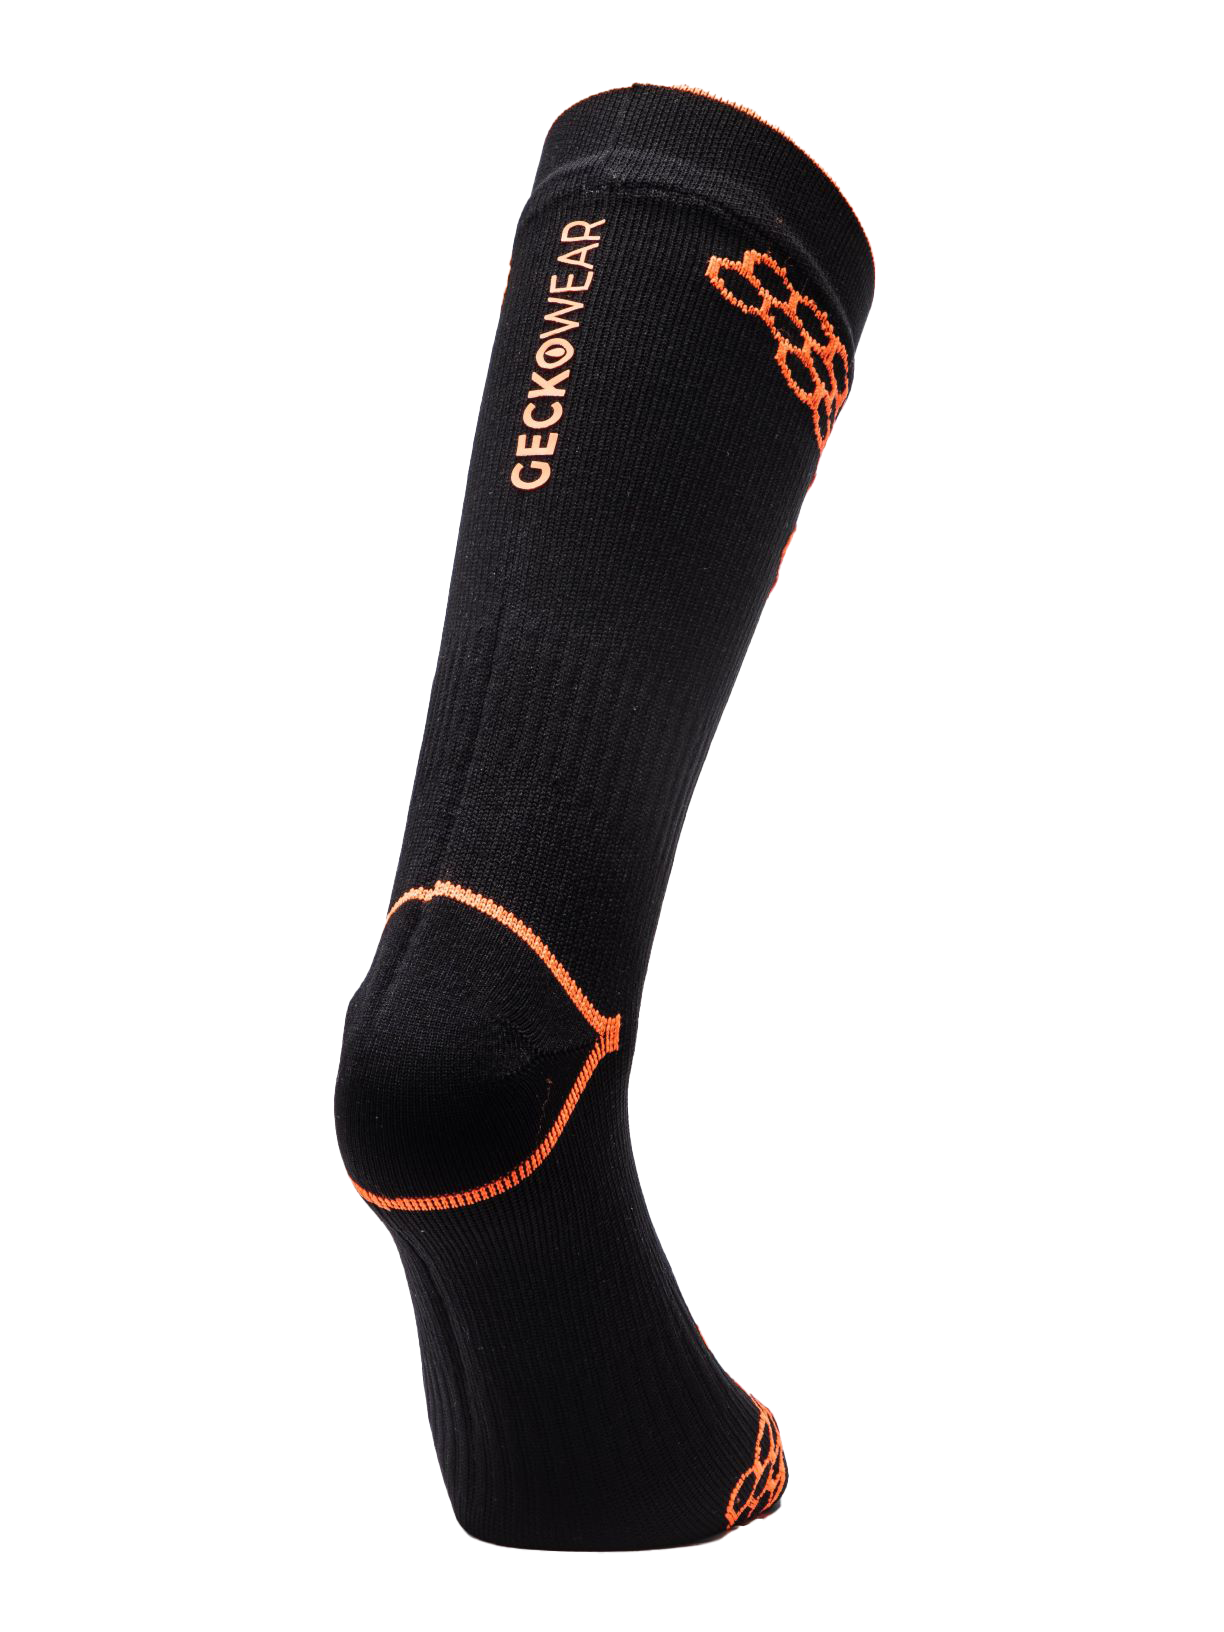 Calf Length Classic All Action Waterproof Socks | Classic